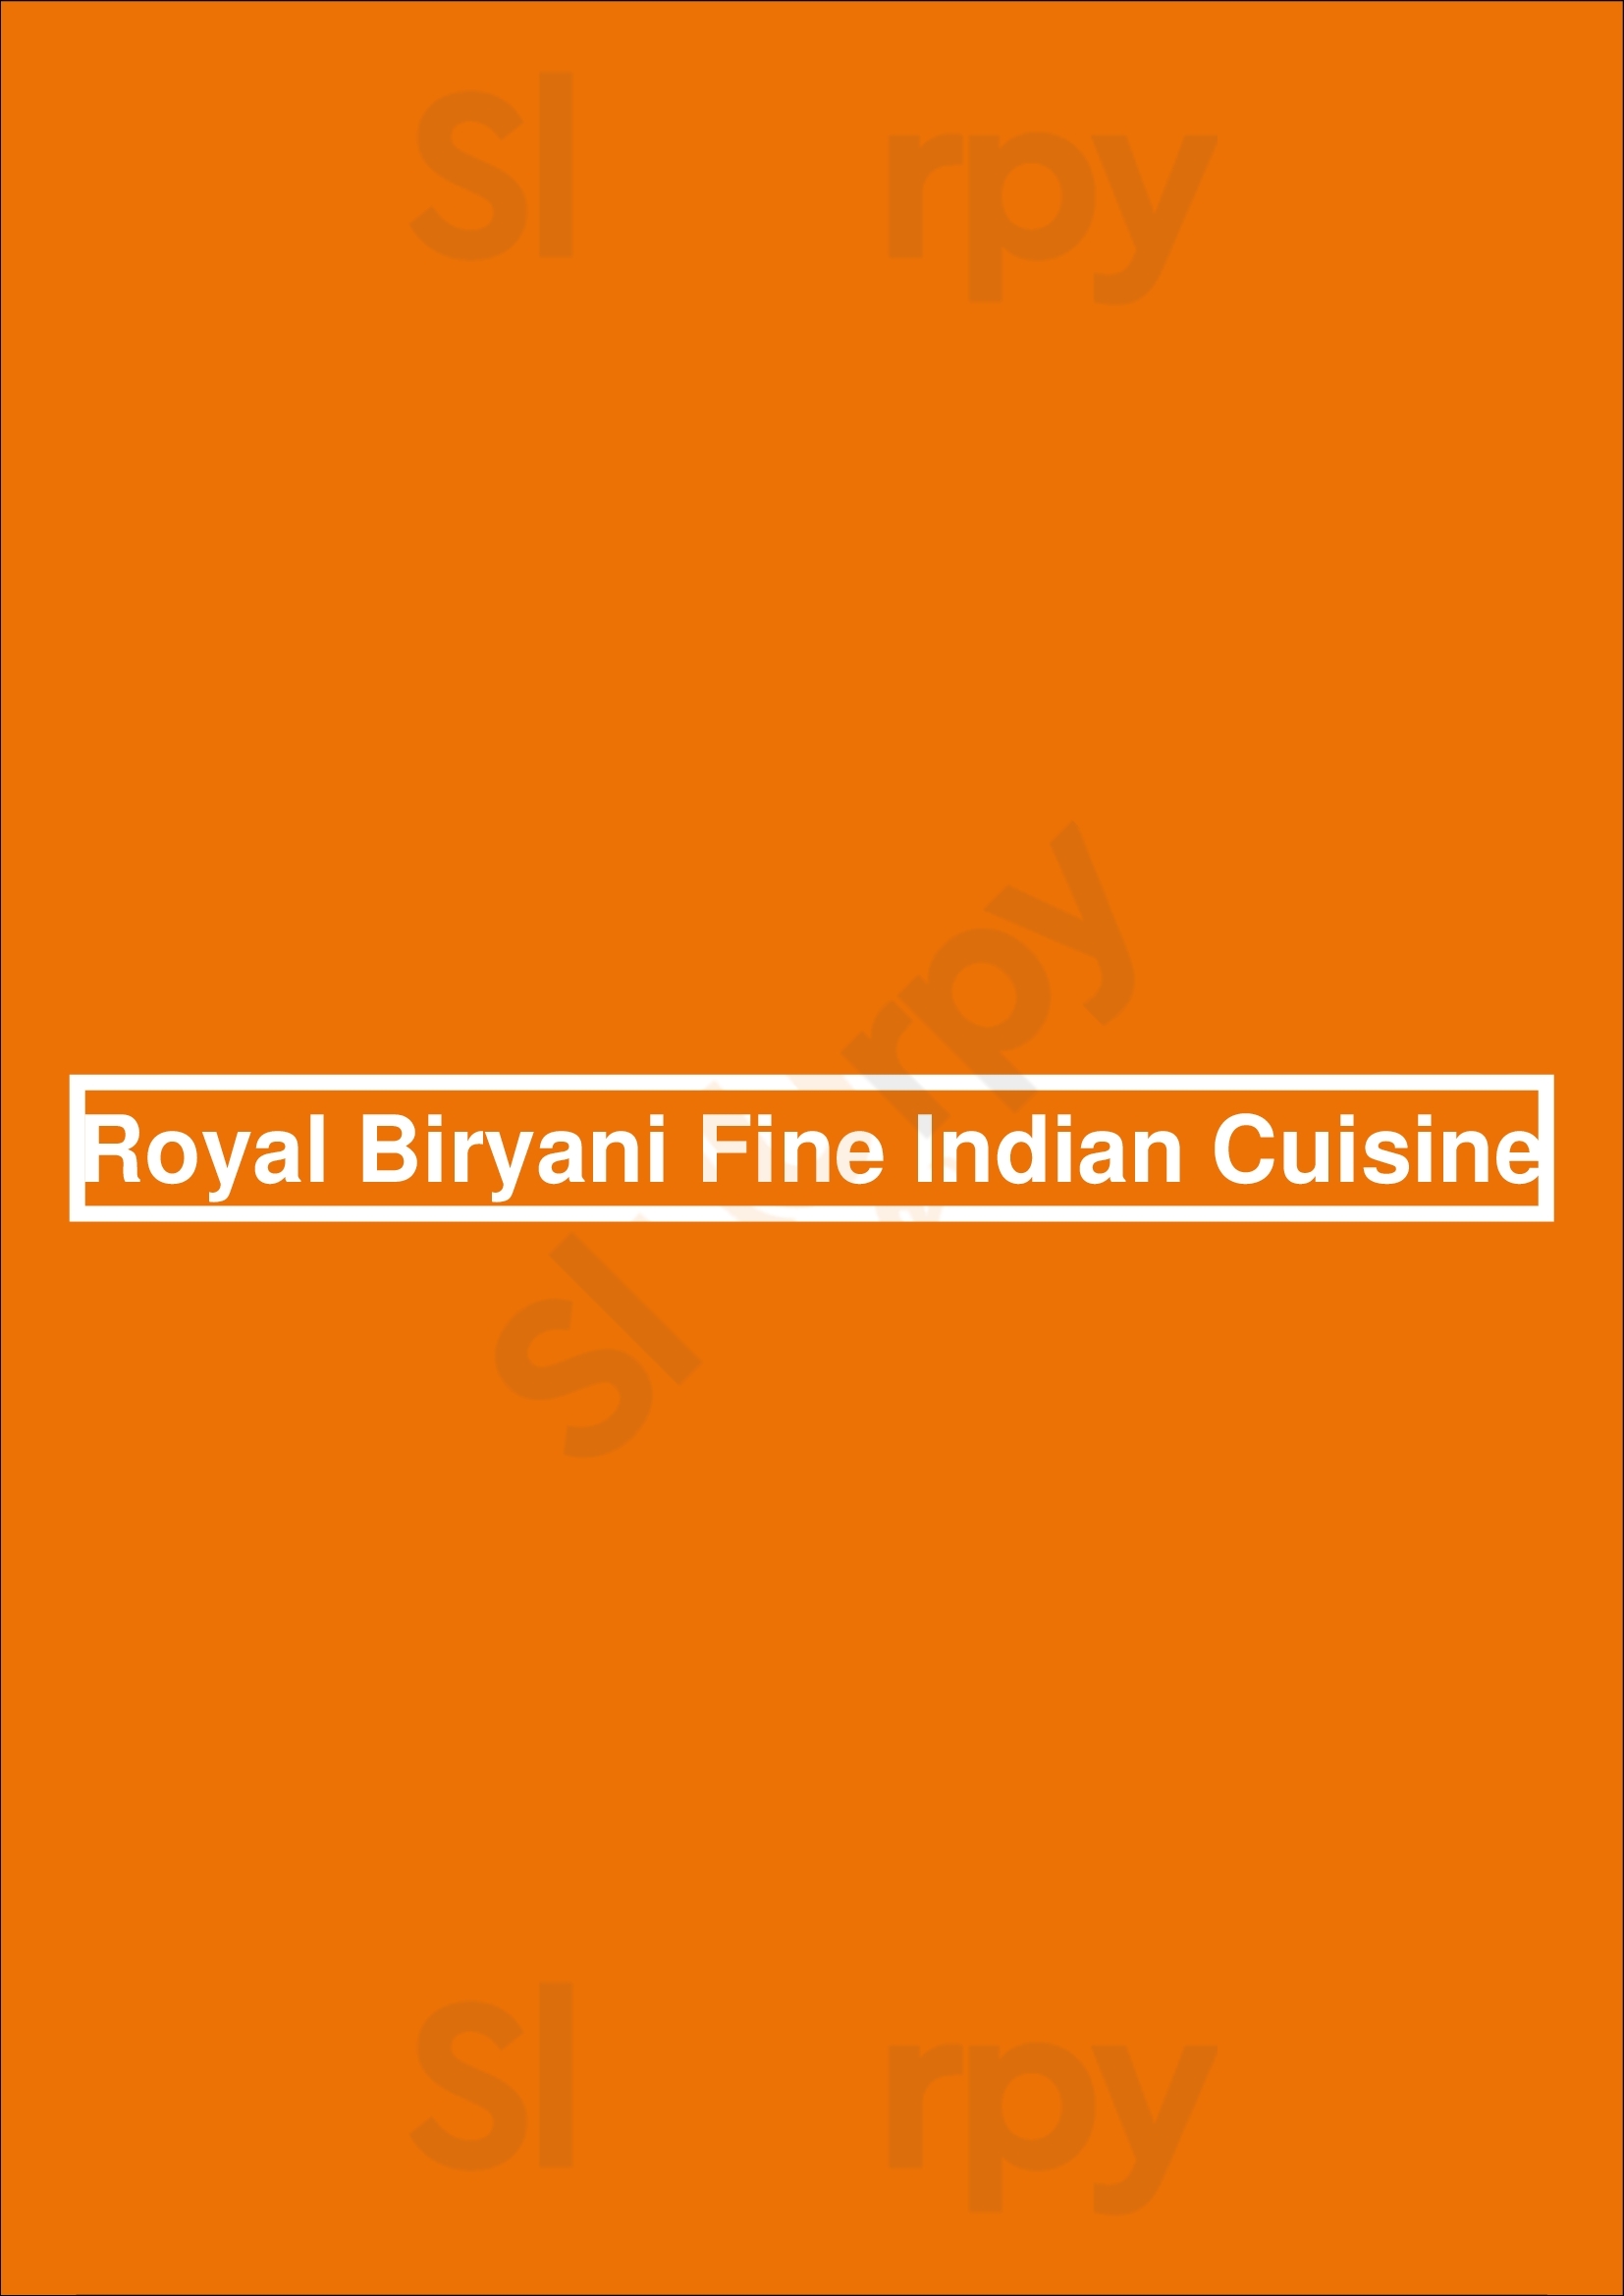 Royal Biryani Fine Indian Cuisine Charlotte Menu - 1